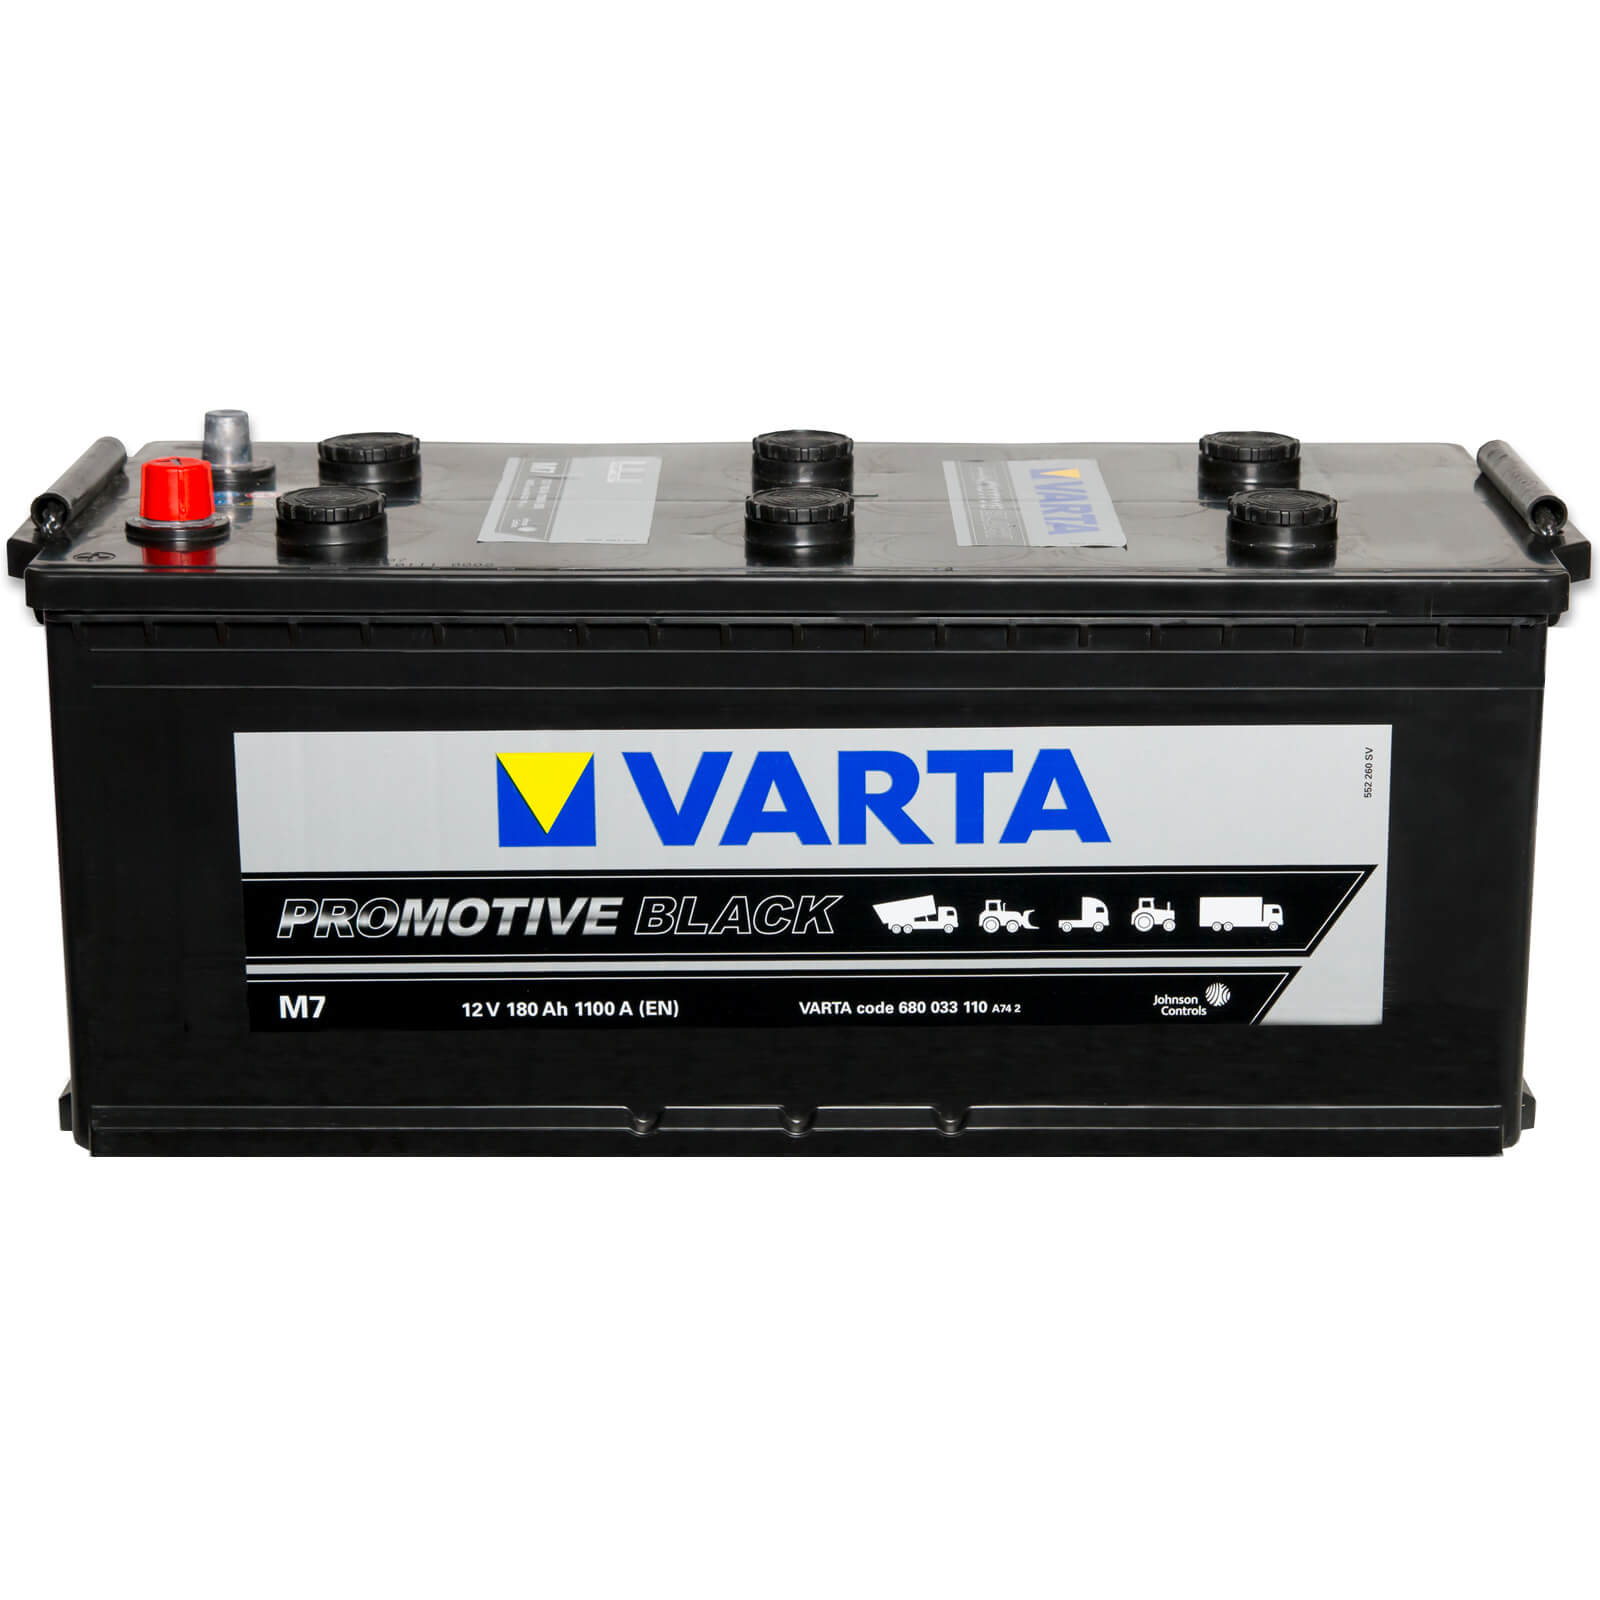 Varta M7 Promotive Black 12V 180Ah 1100A/EN